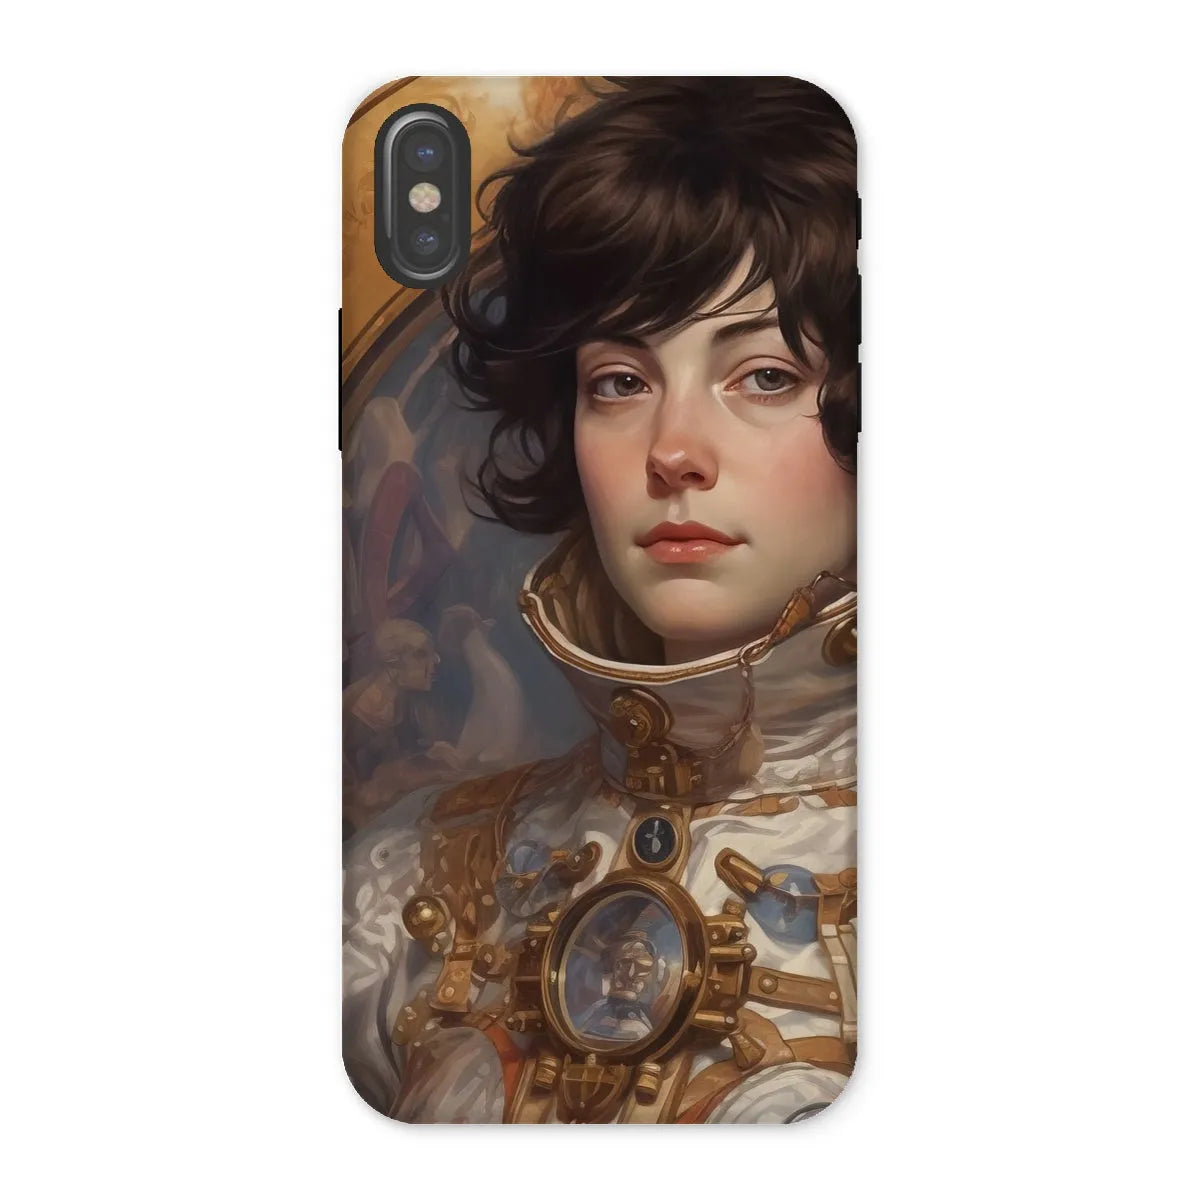 Chloé The Lesbian Astronaut - Space Aesthetic Art Phone Case - Iphone x / Matte - Mobile Phone Cases - Aesthetic Art